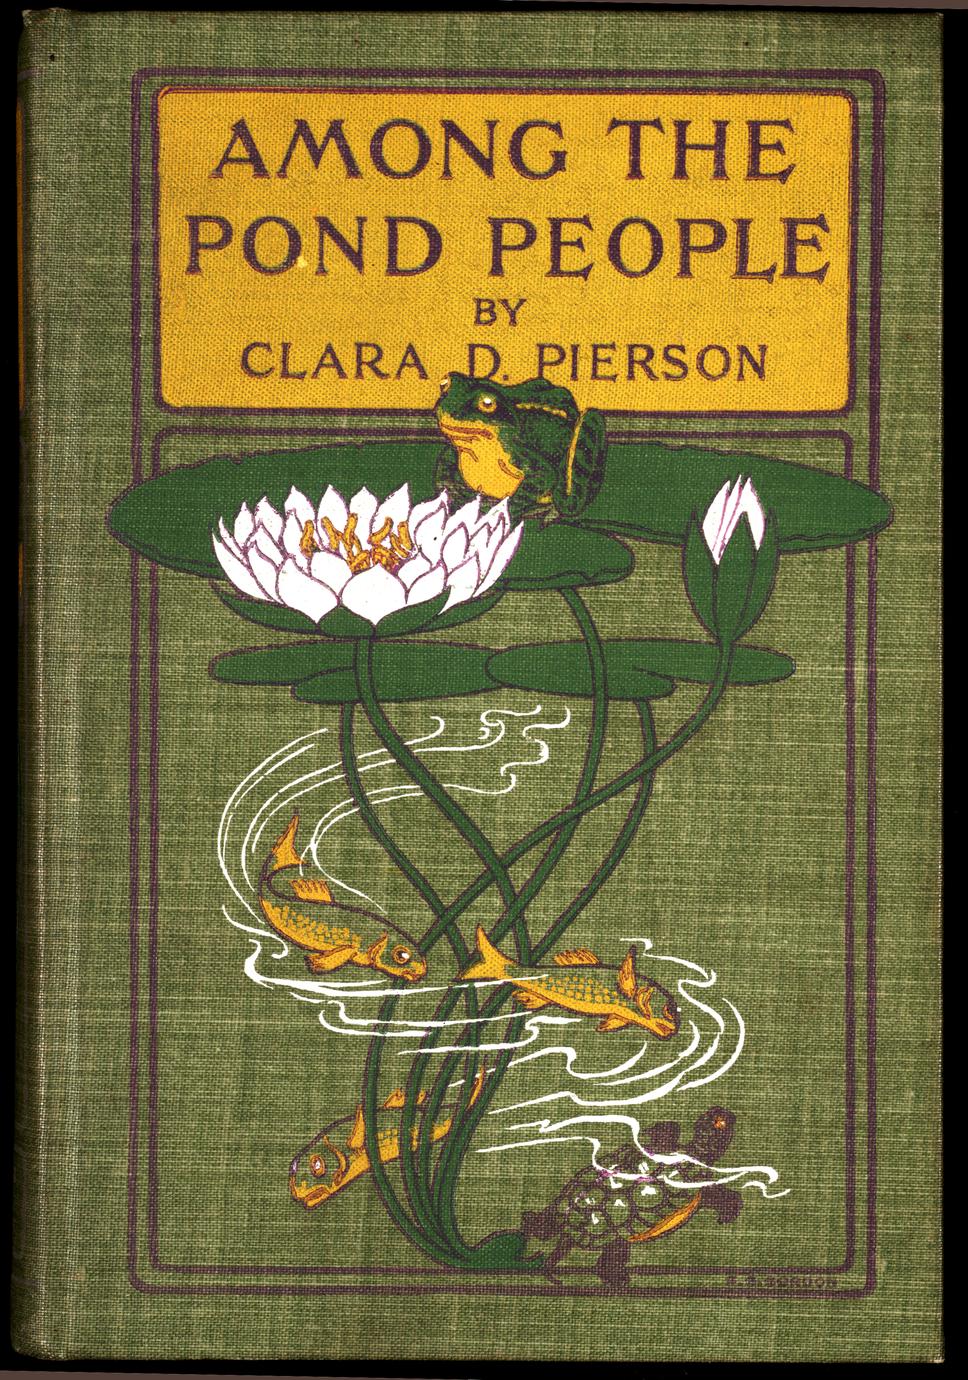 Among the pond people (1 of 3)